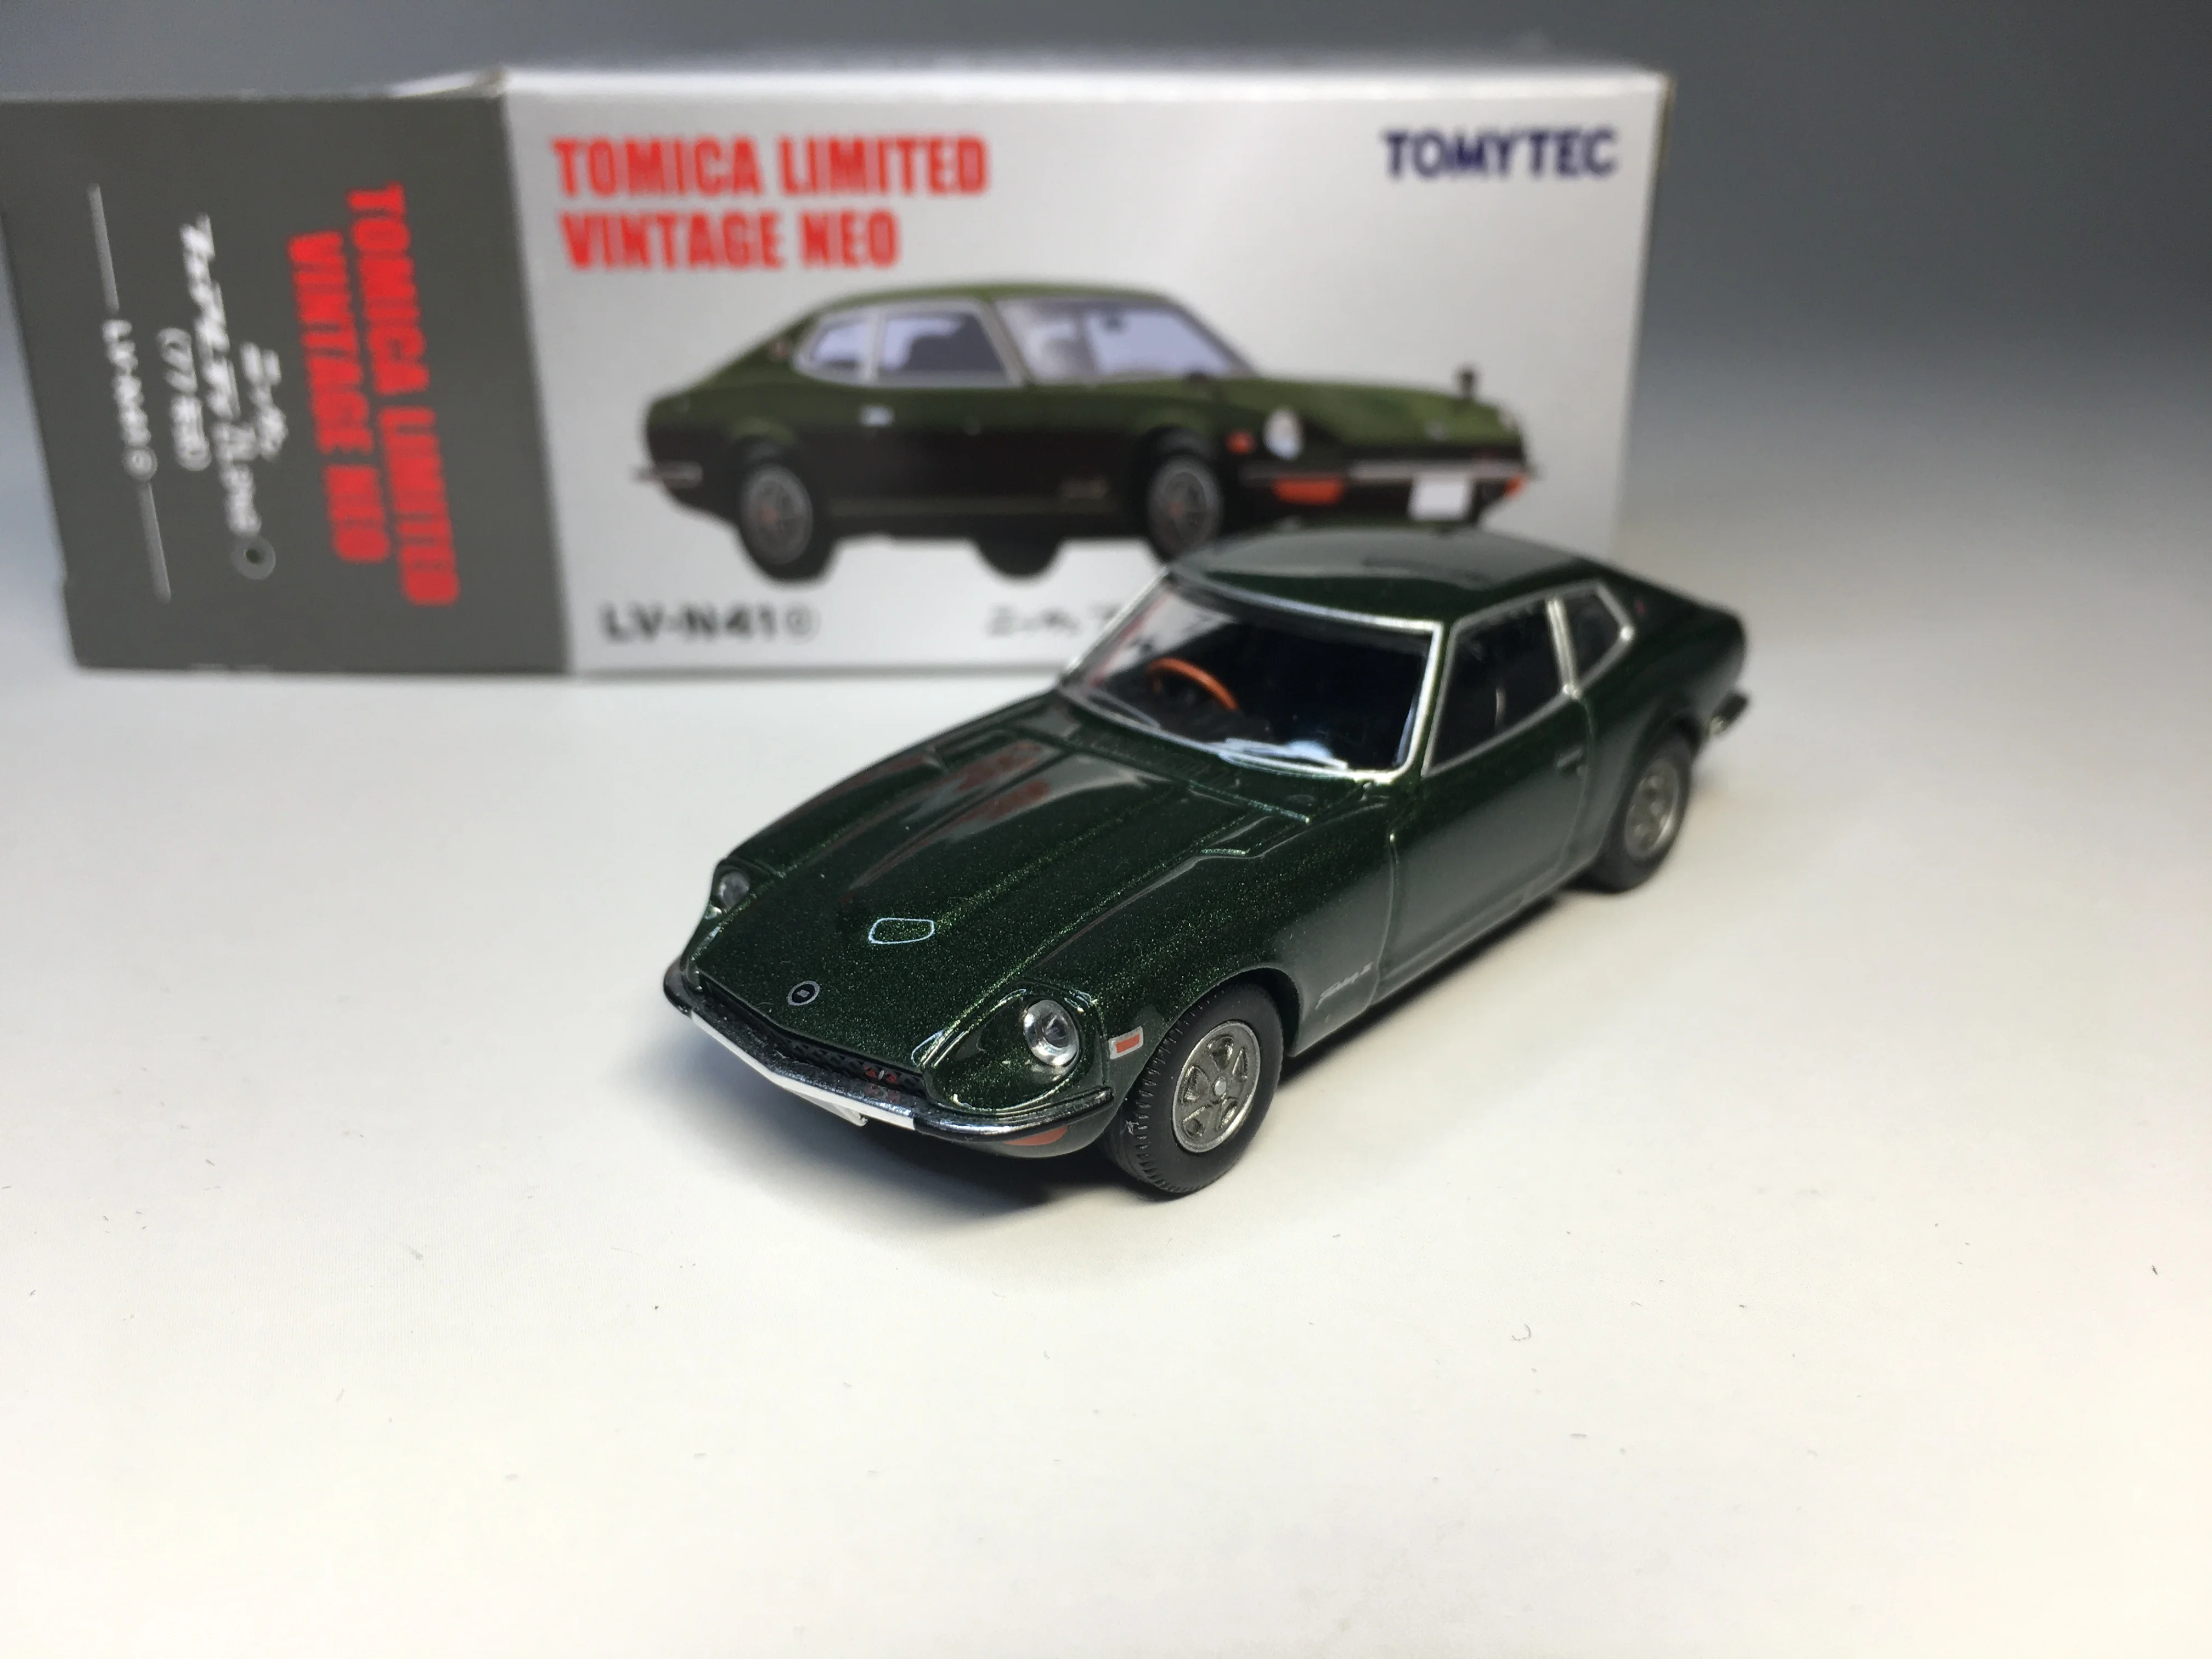 Tomytec Tomica Limited Vintage Neo Nissan Fairlady Z-L 2BY2 LV-N41c 1:64 